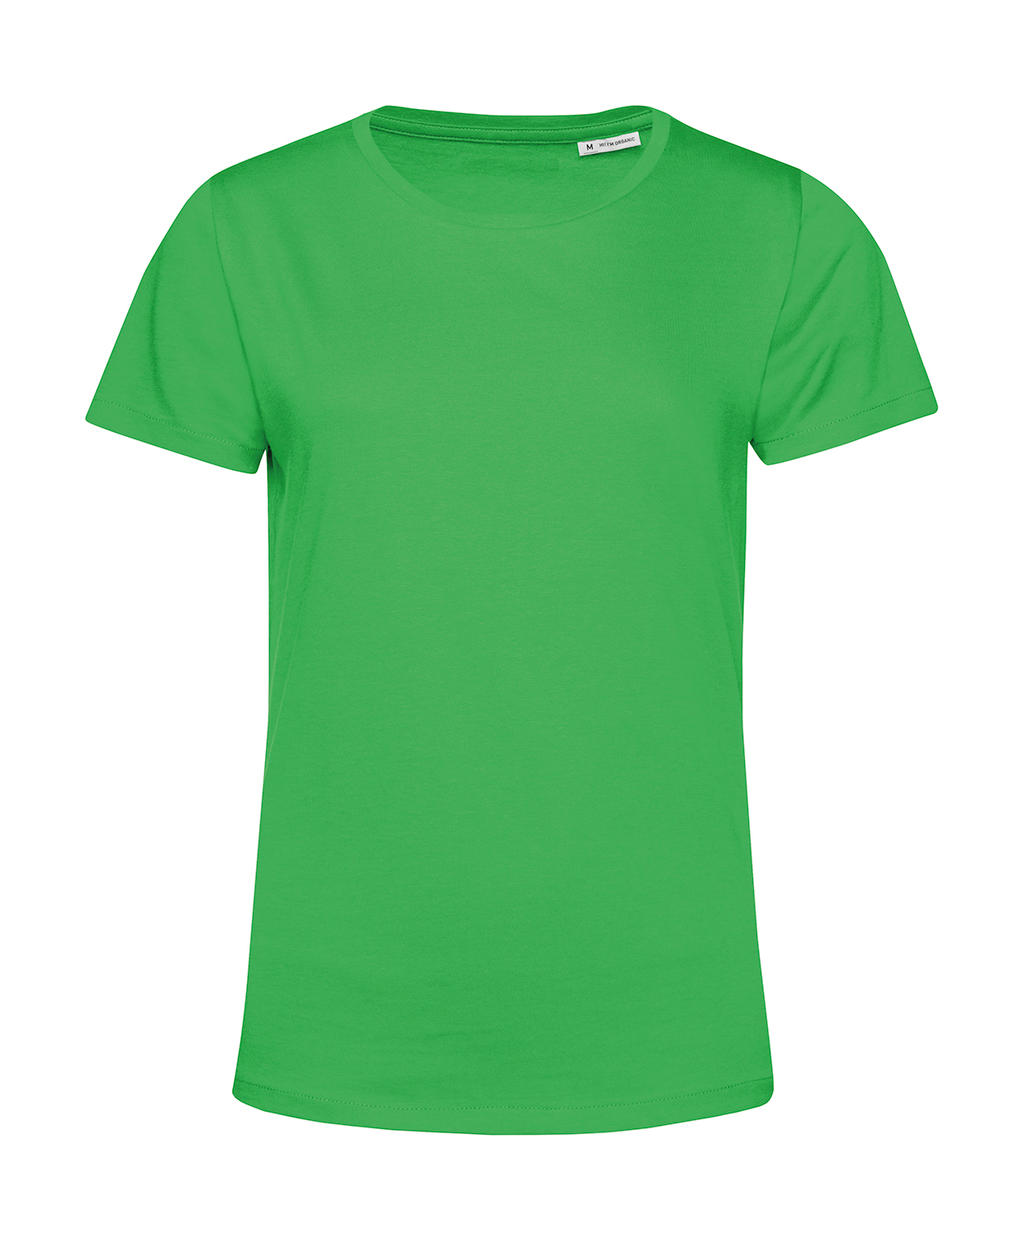 Tričko dámské BC Organic Inspire E150 - zelené, M